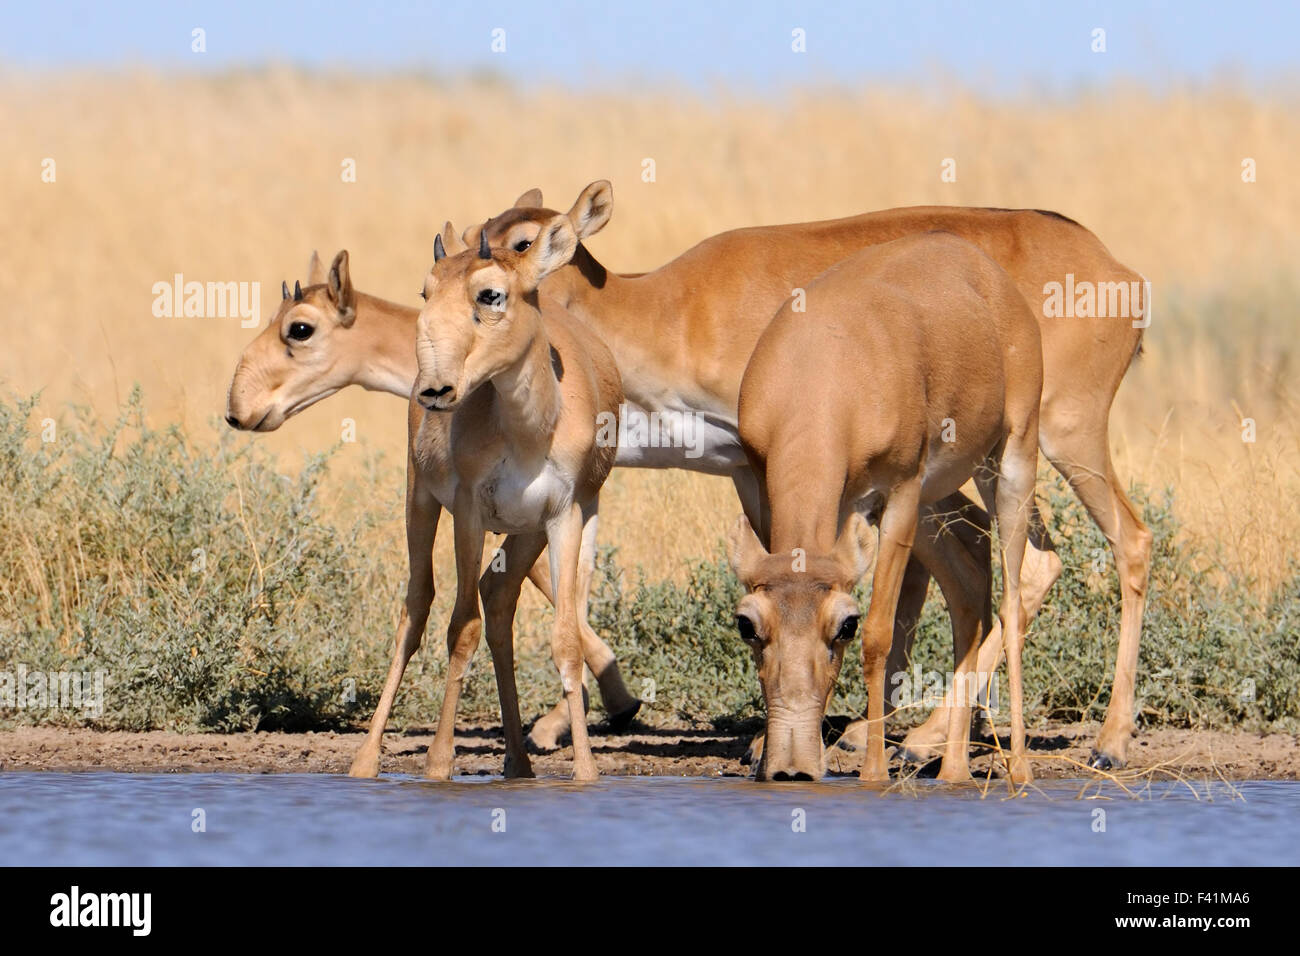 Critically endangered wild Saiga antelopes (Saiga tatarica) at watering in steppe. Stock Photo